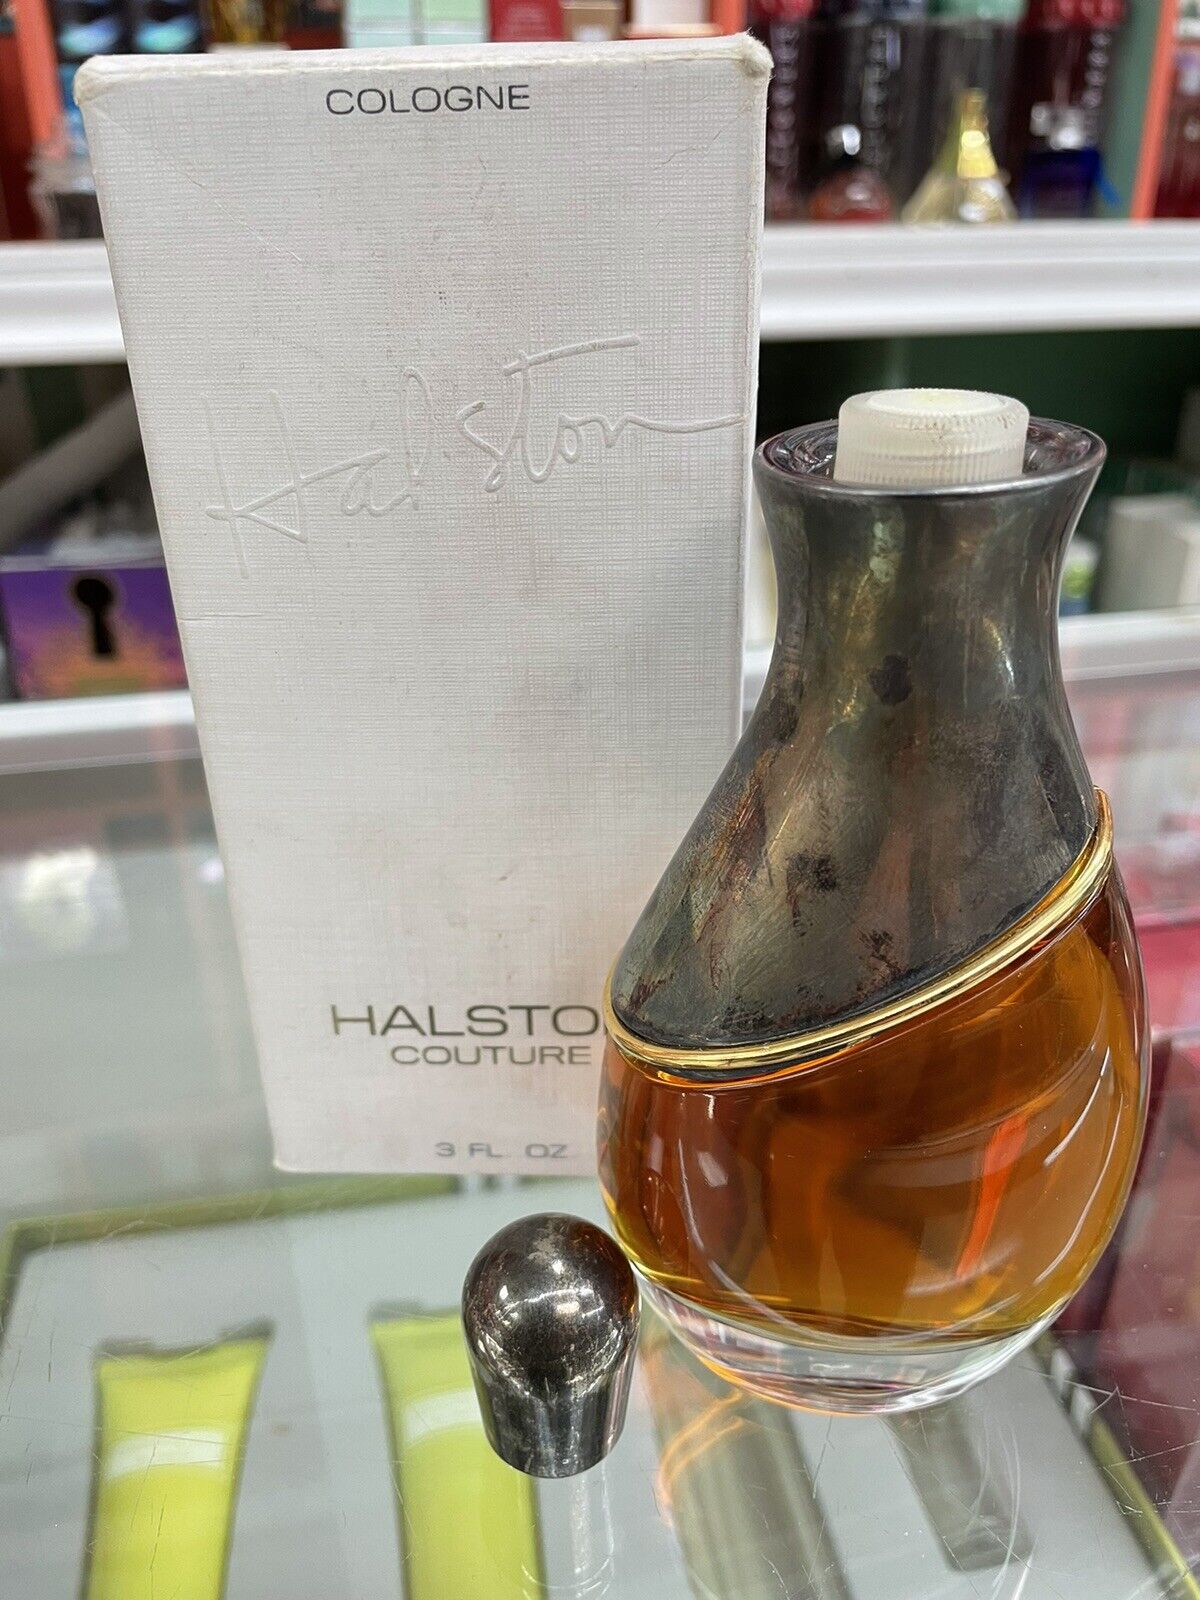 Halston COUTURE Cologne 3 oz 90 ml Splash VINTAGE 1980’s NEW IN BOX, Cap Broken